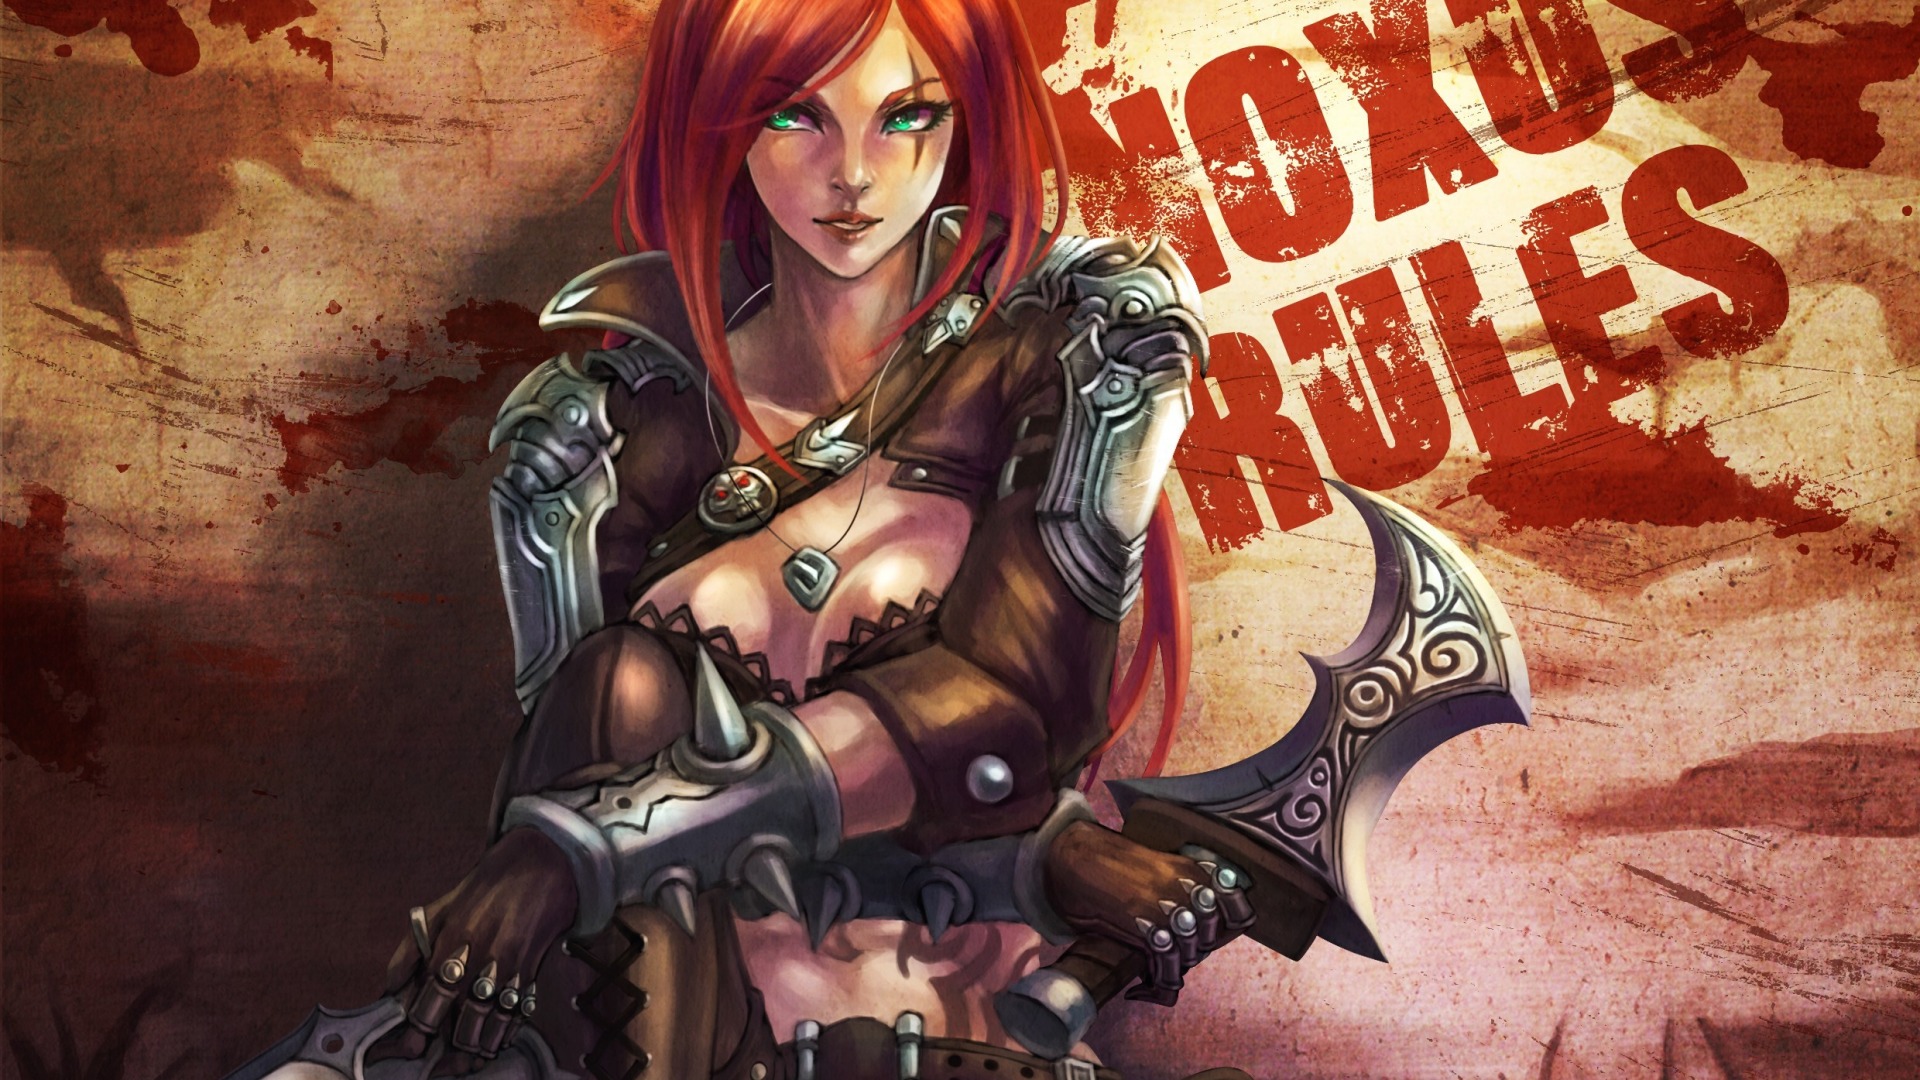 Wallpaper Katarina, League of legends video game, girl warrior